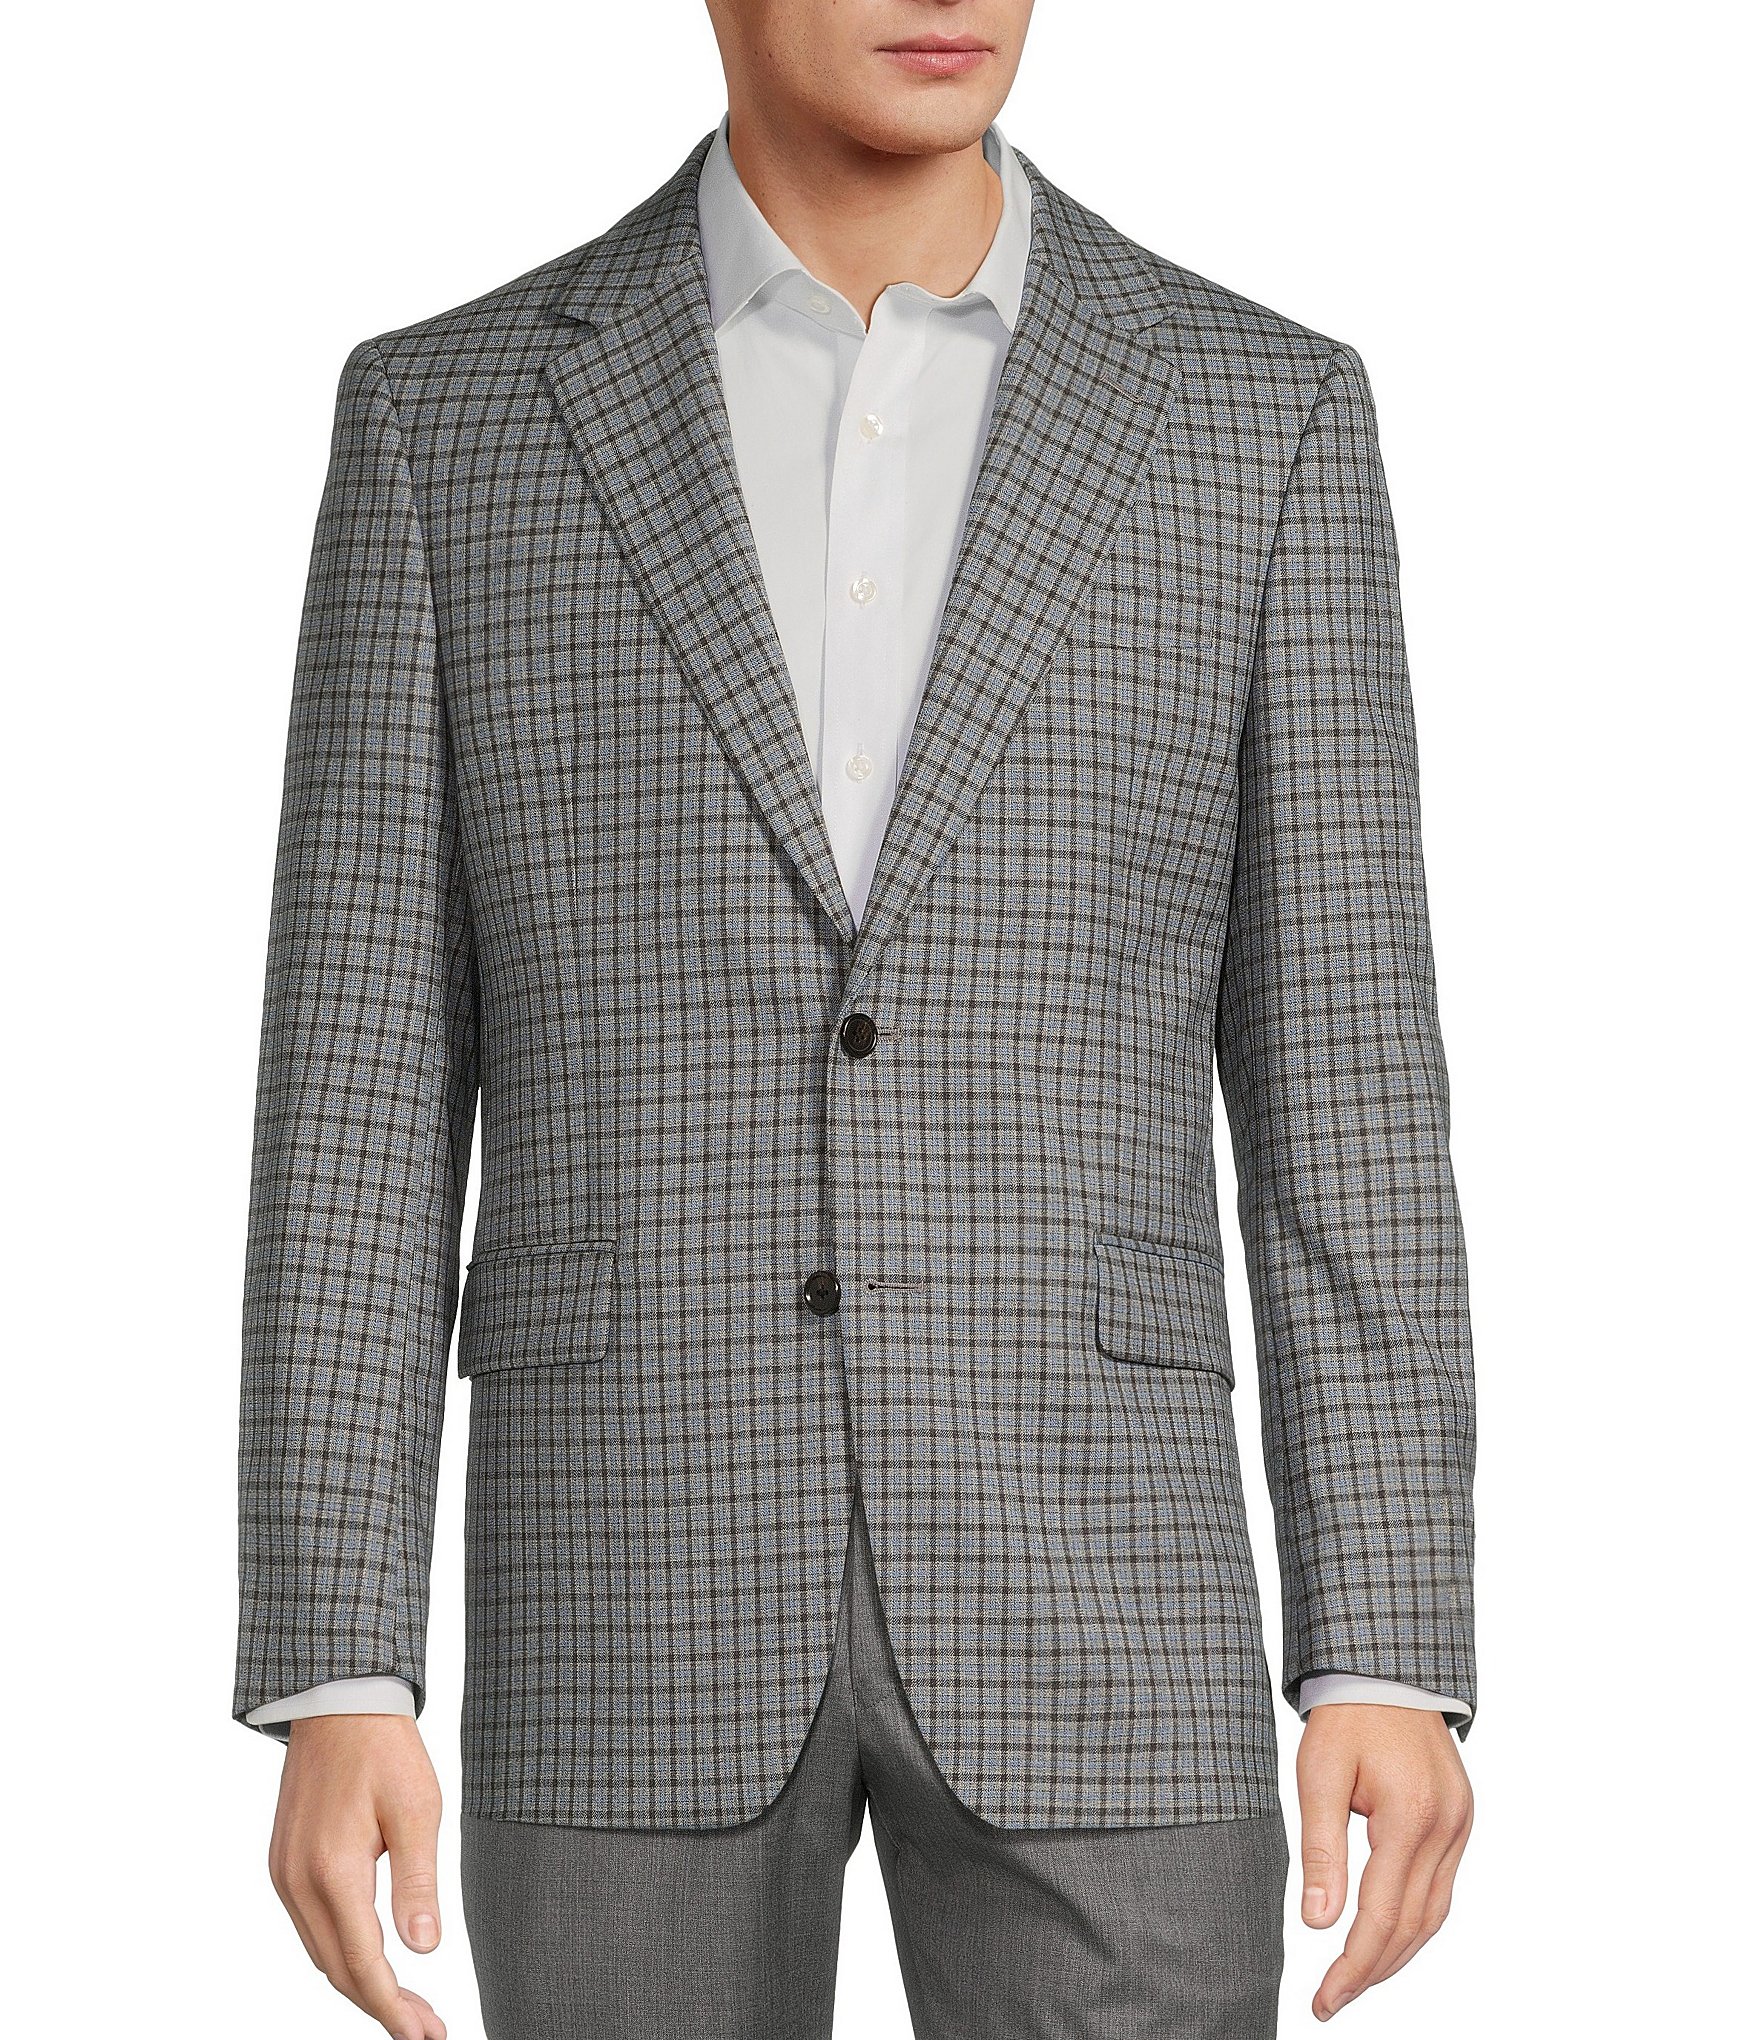 Men's Business Casual Work Clothes | lululemon